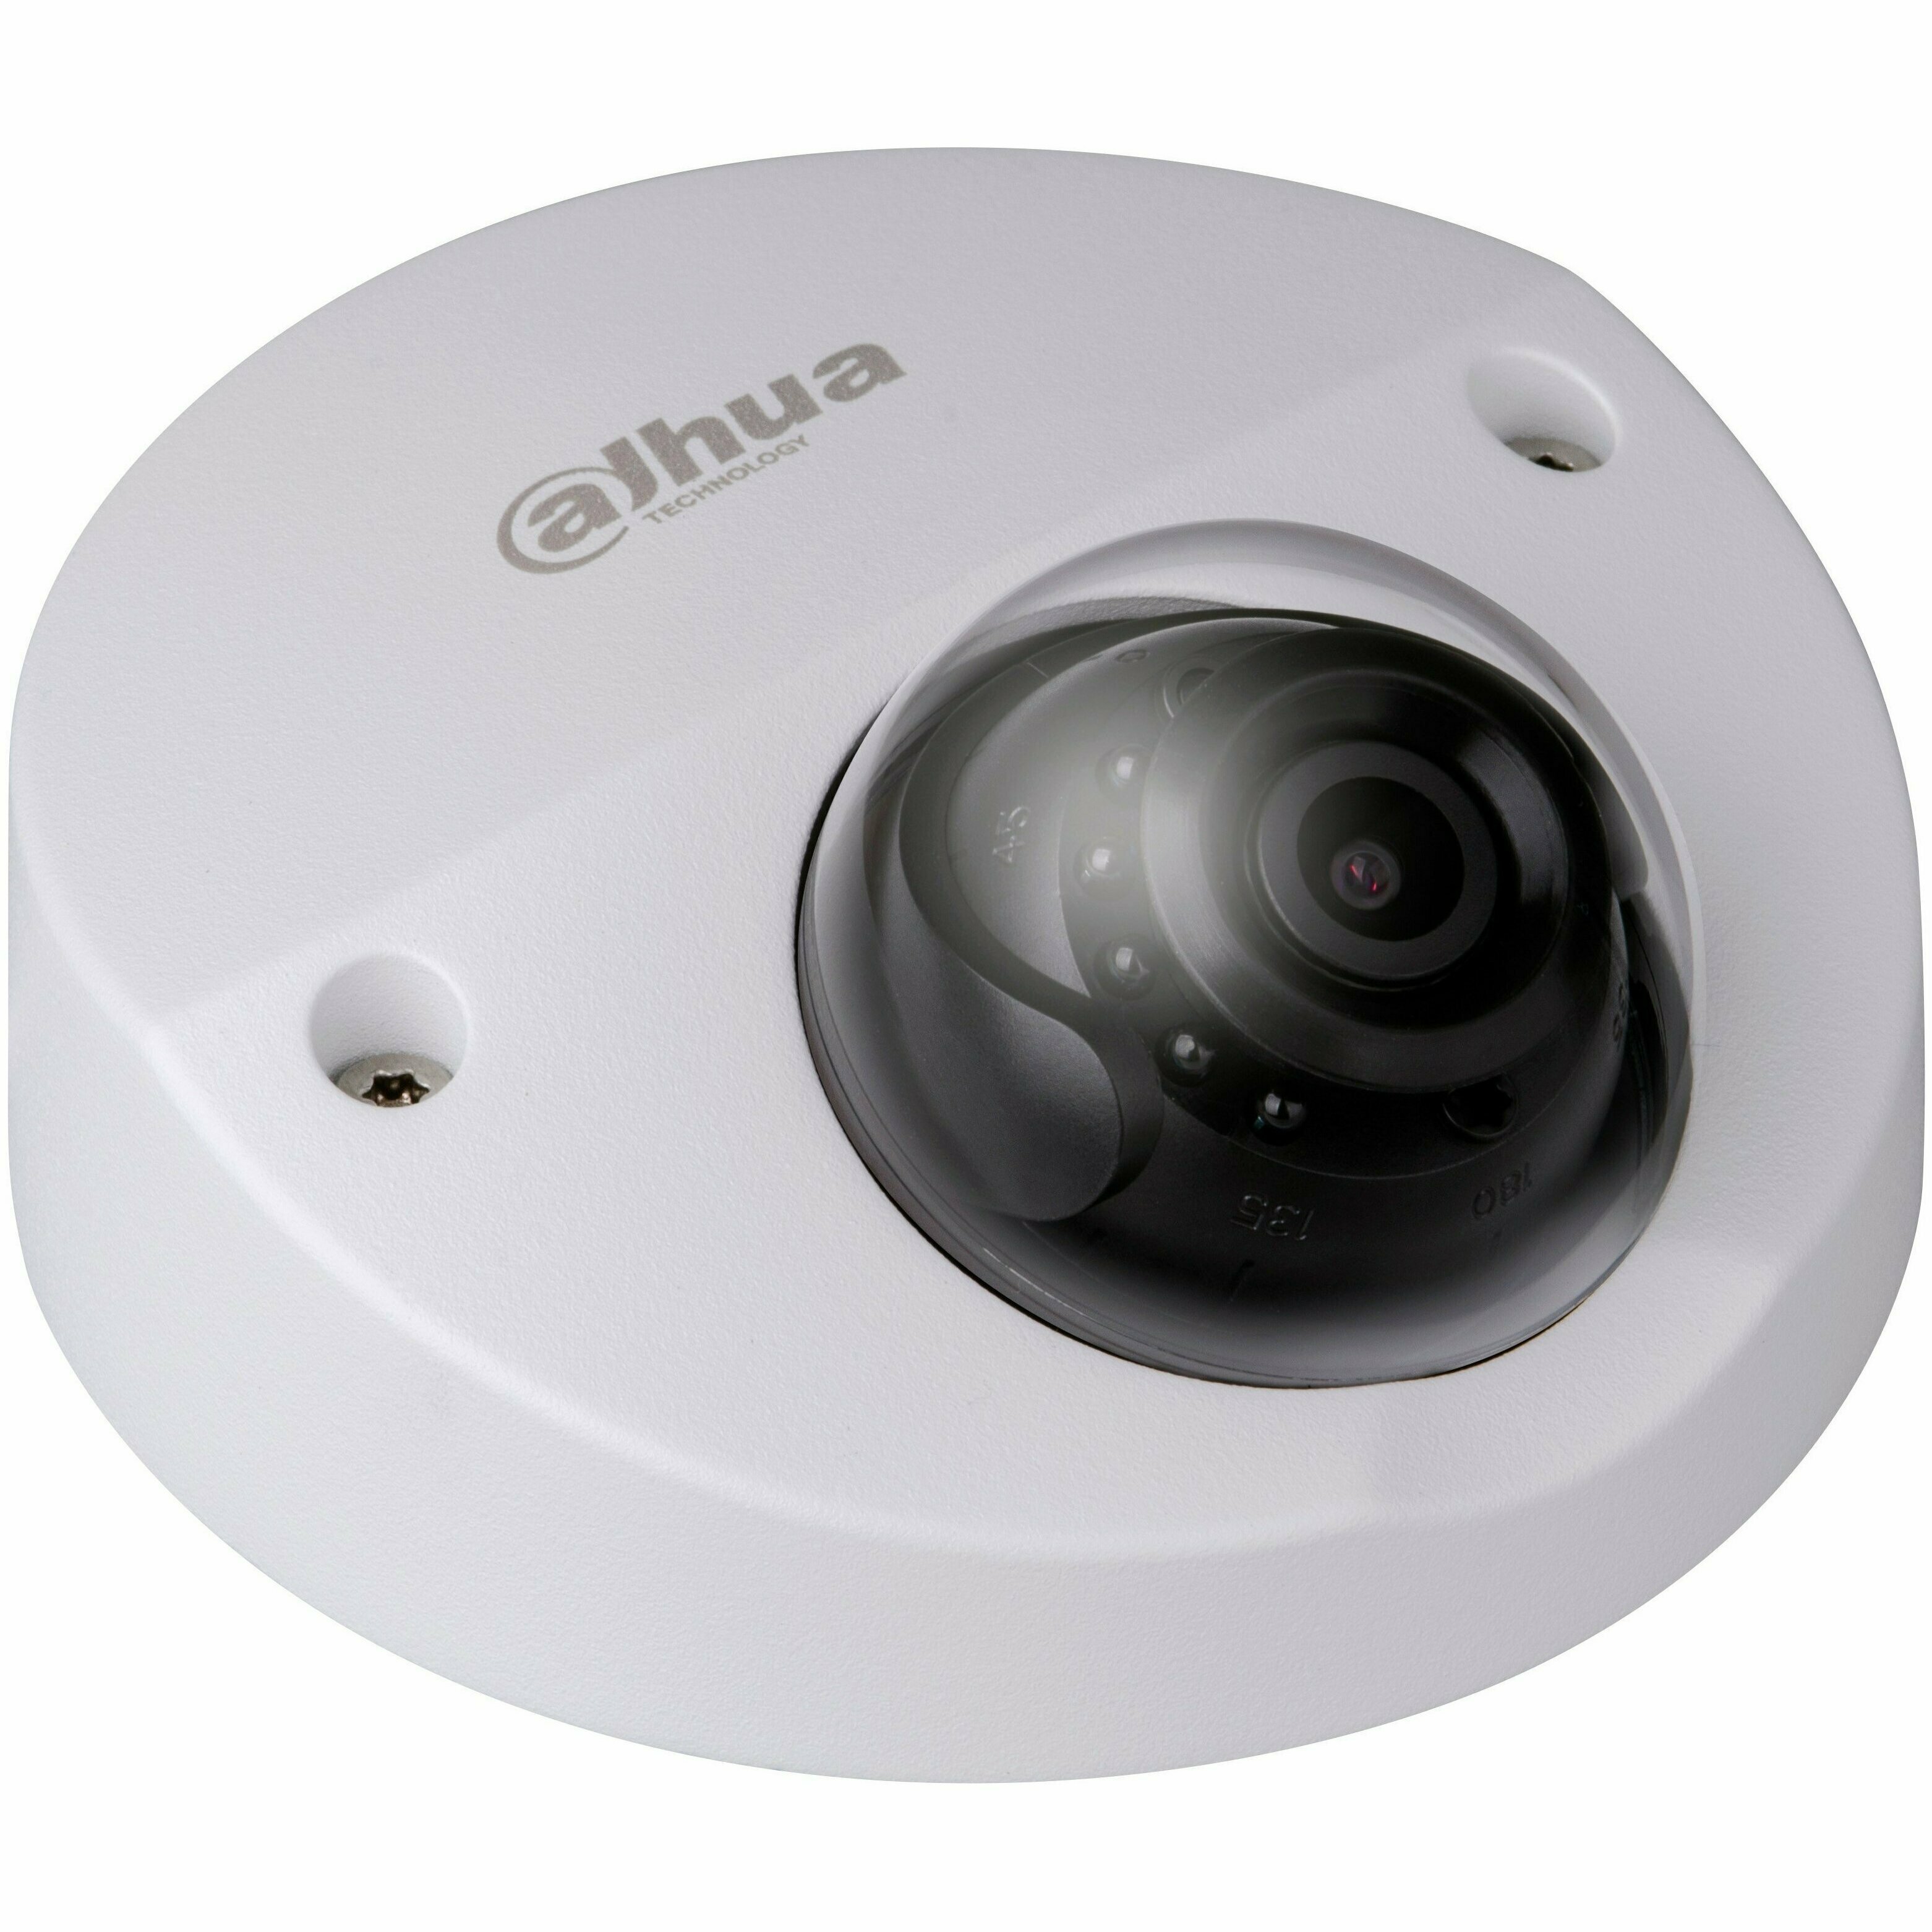 IP-камера DAHUA IPC-HDBW2101FP-AS 2.8мм, уличная, купольная, 2Мпикс, CMOS, до 1920x1080, до 25кадров/с, ИК подсветка 30м, POE, -40 °C/+60 °C, белый (DH-IPC-HDBW2101FP-AS-0280B) - фото 1